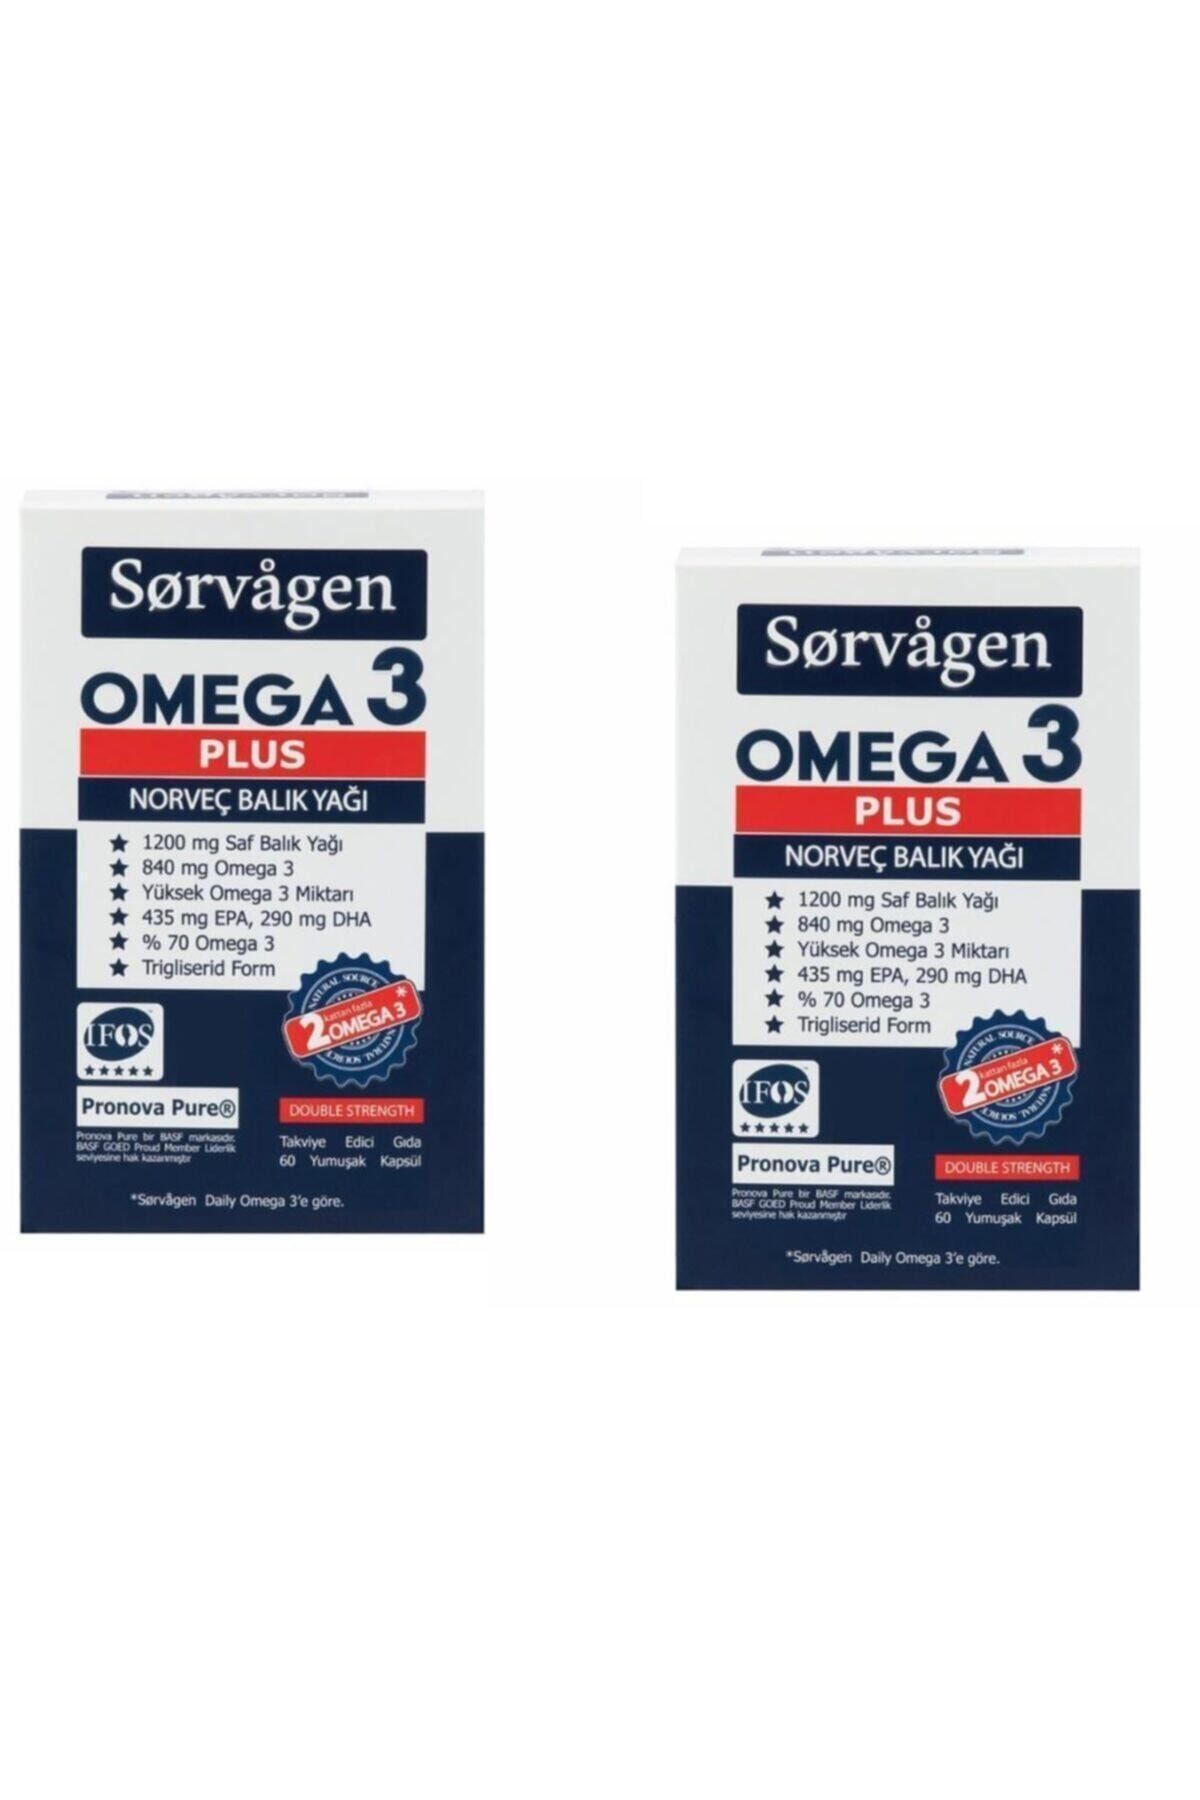 Sorvagen Omega 3 Plus Norveç Balık Yağı 60 Kapsül x 2 Adet